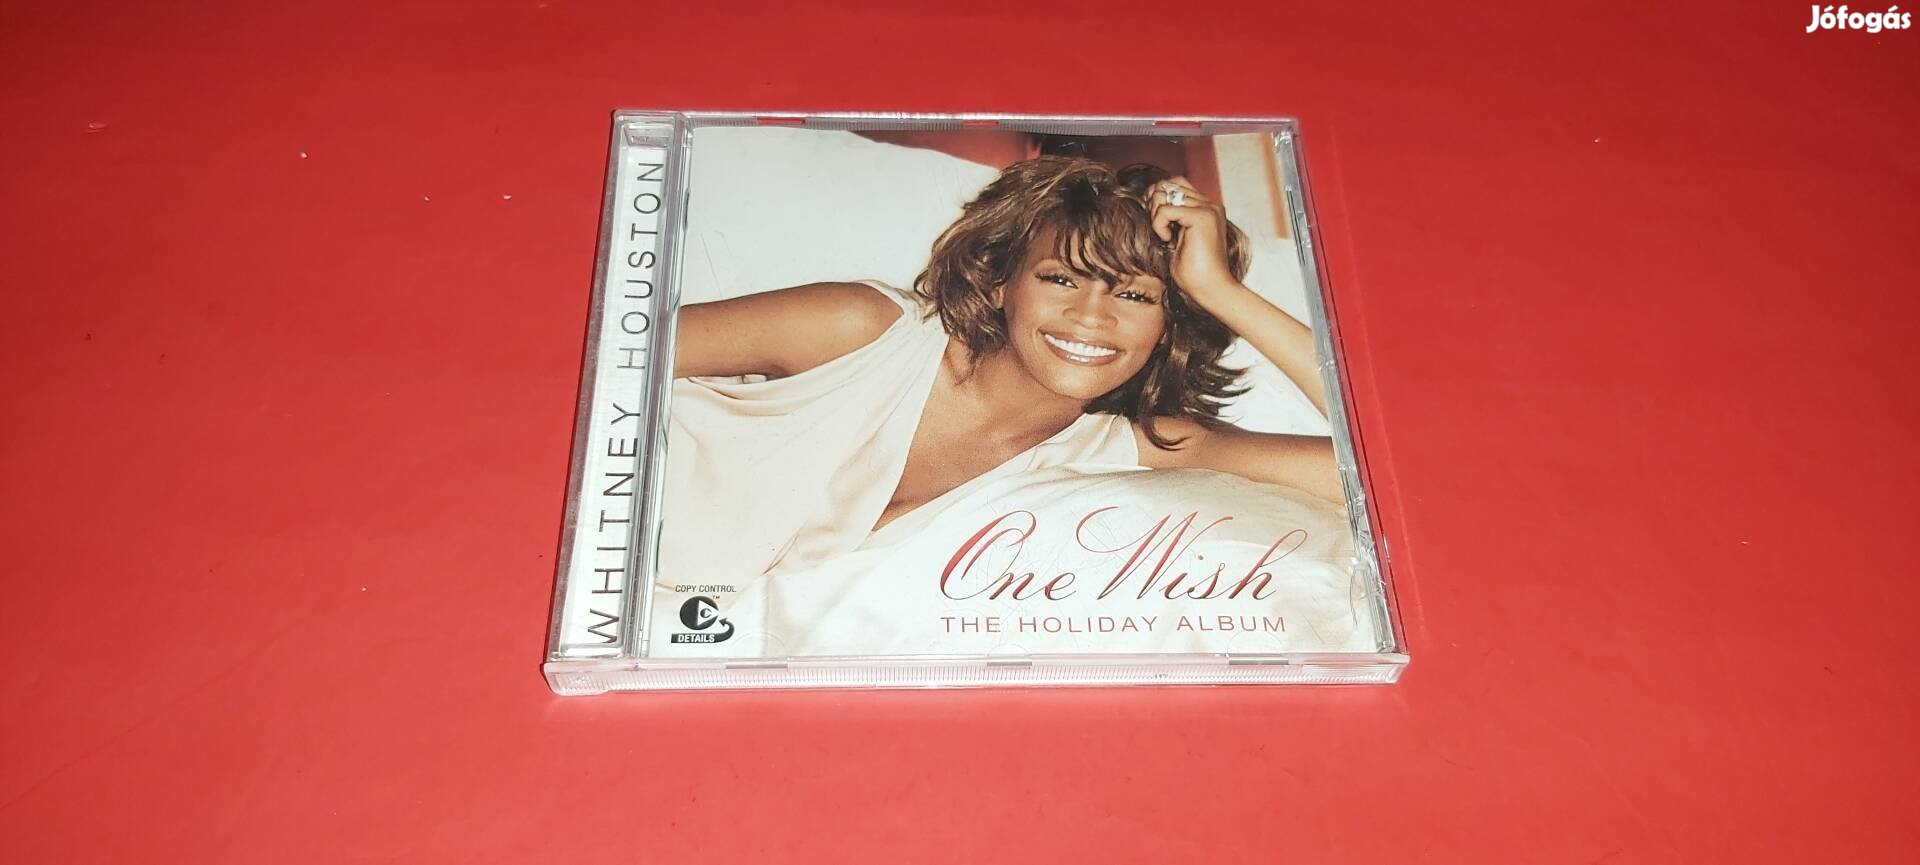 Whitney Houston The holiday album Cd 2003